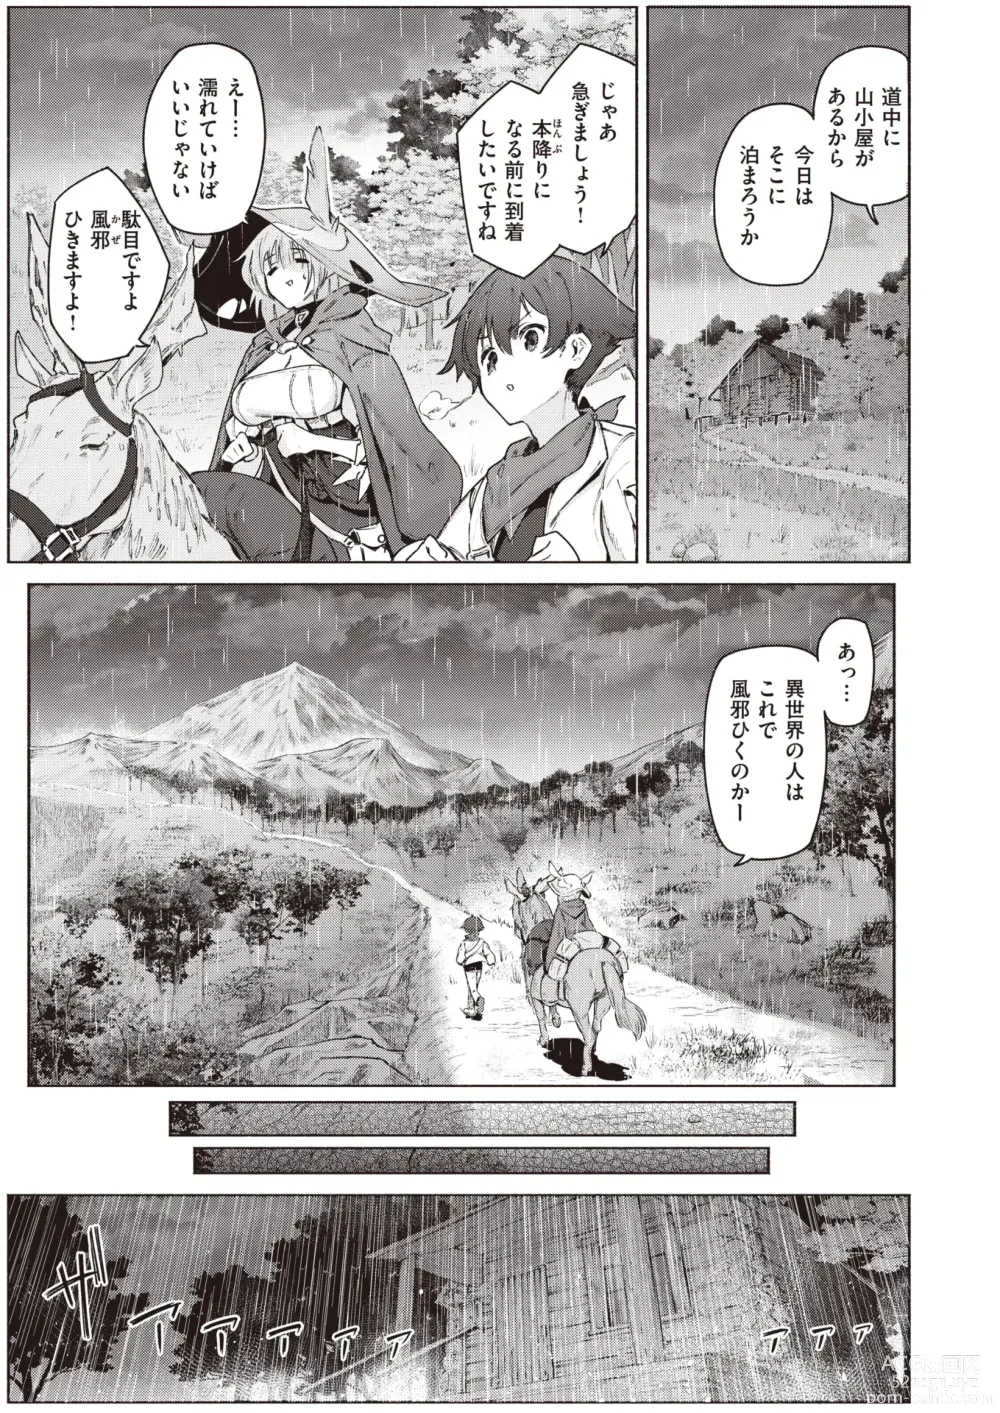 Page 8 of manga Isekai Rakuten Vol. 27